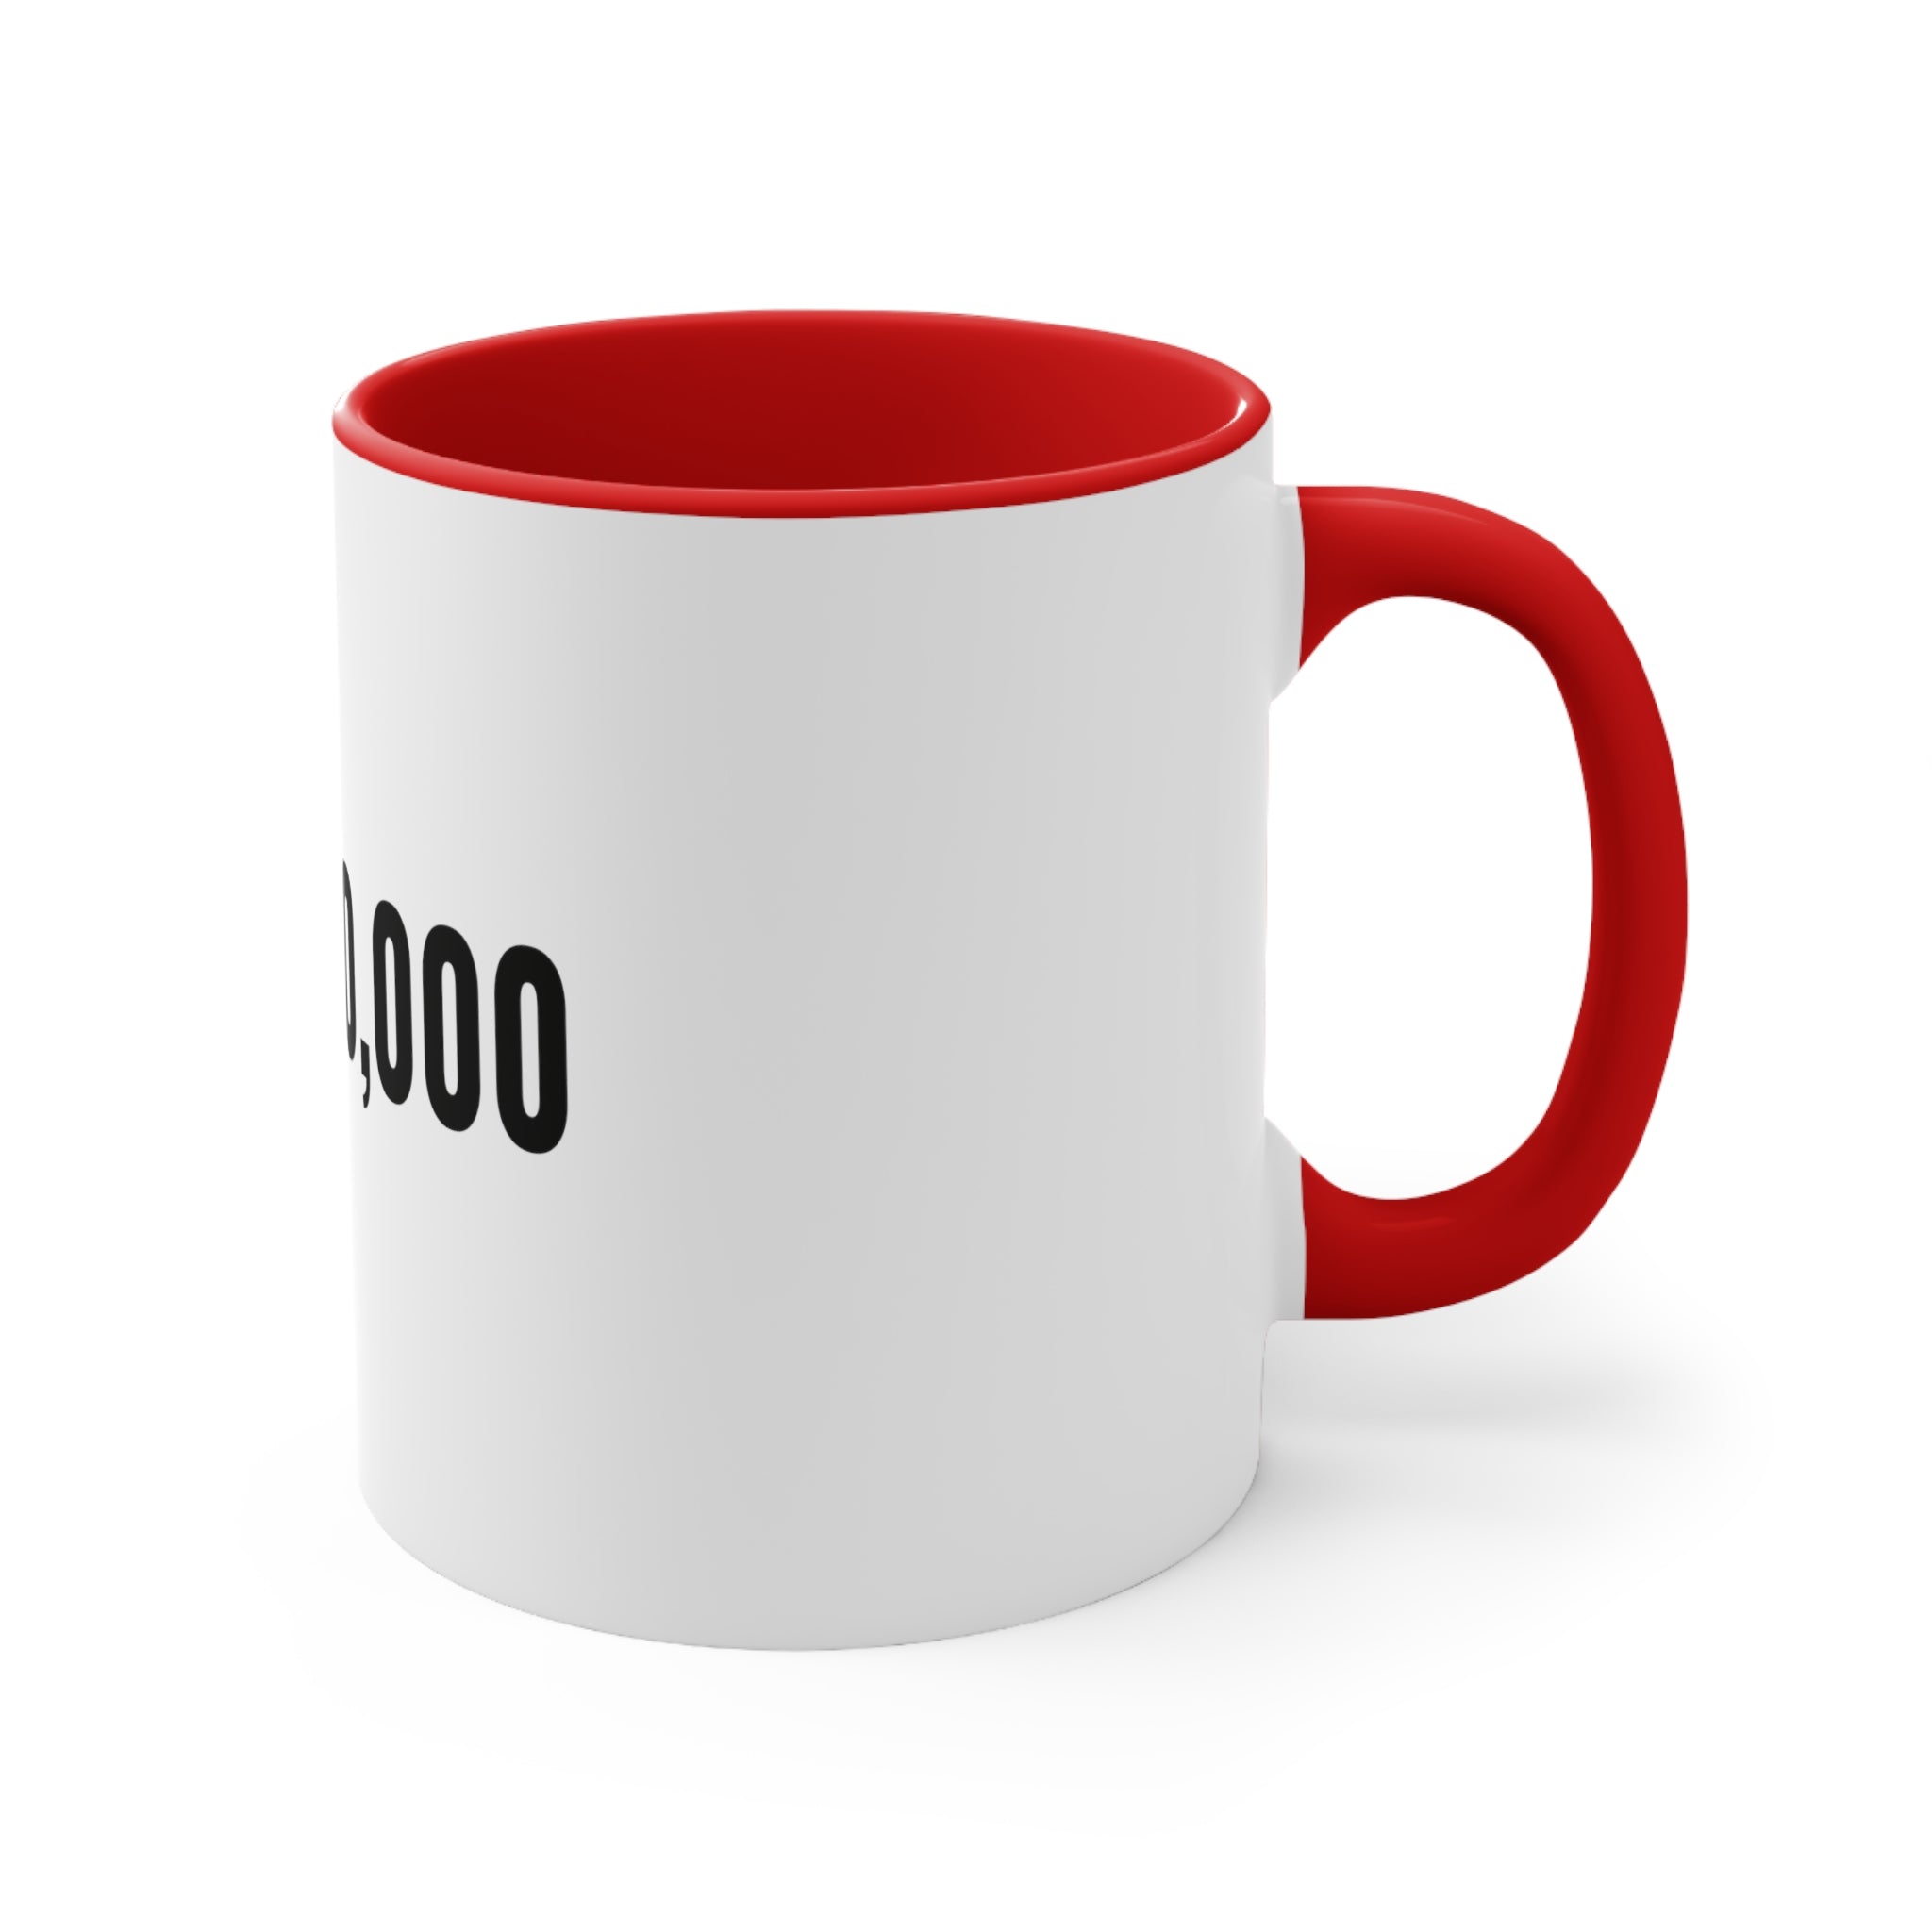 CE0,000,000 Accent Coffee Mug, 11oz